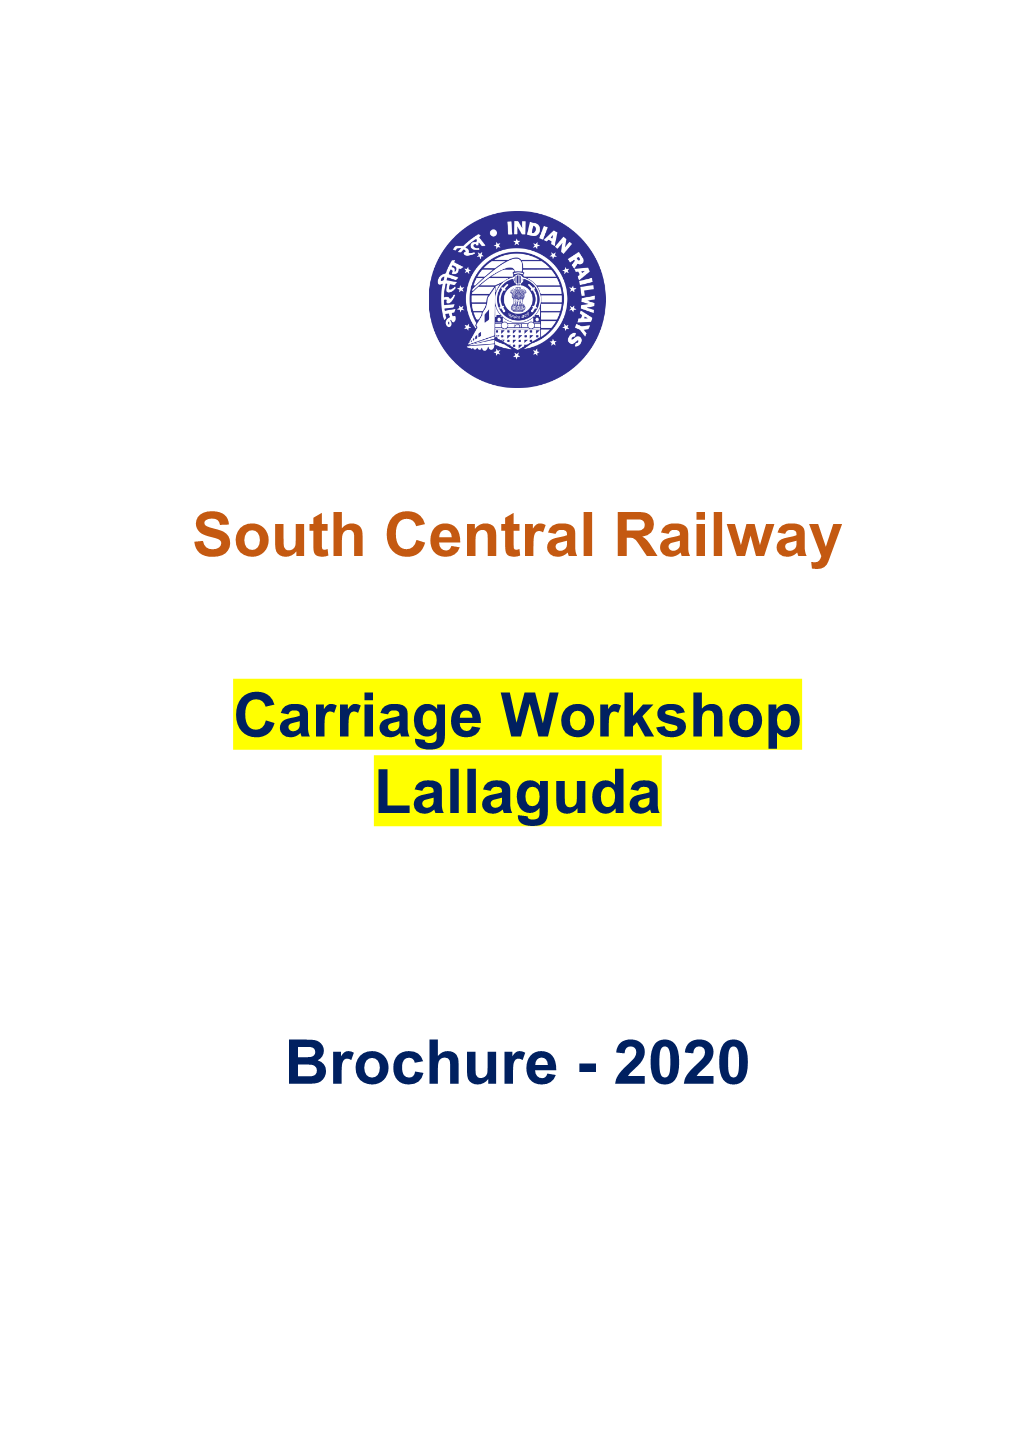 South Central Railway Carriage Workshop Lallaguda Brochure